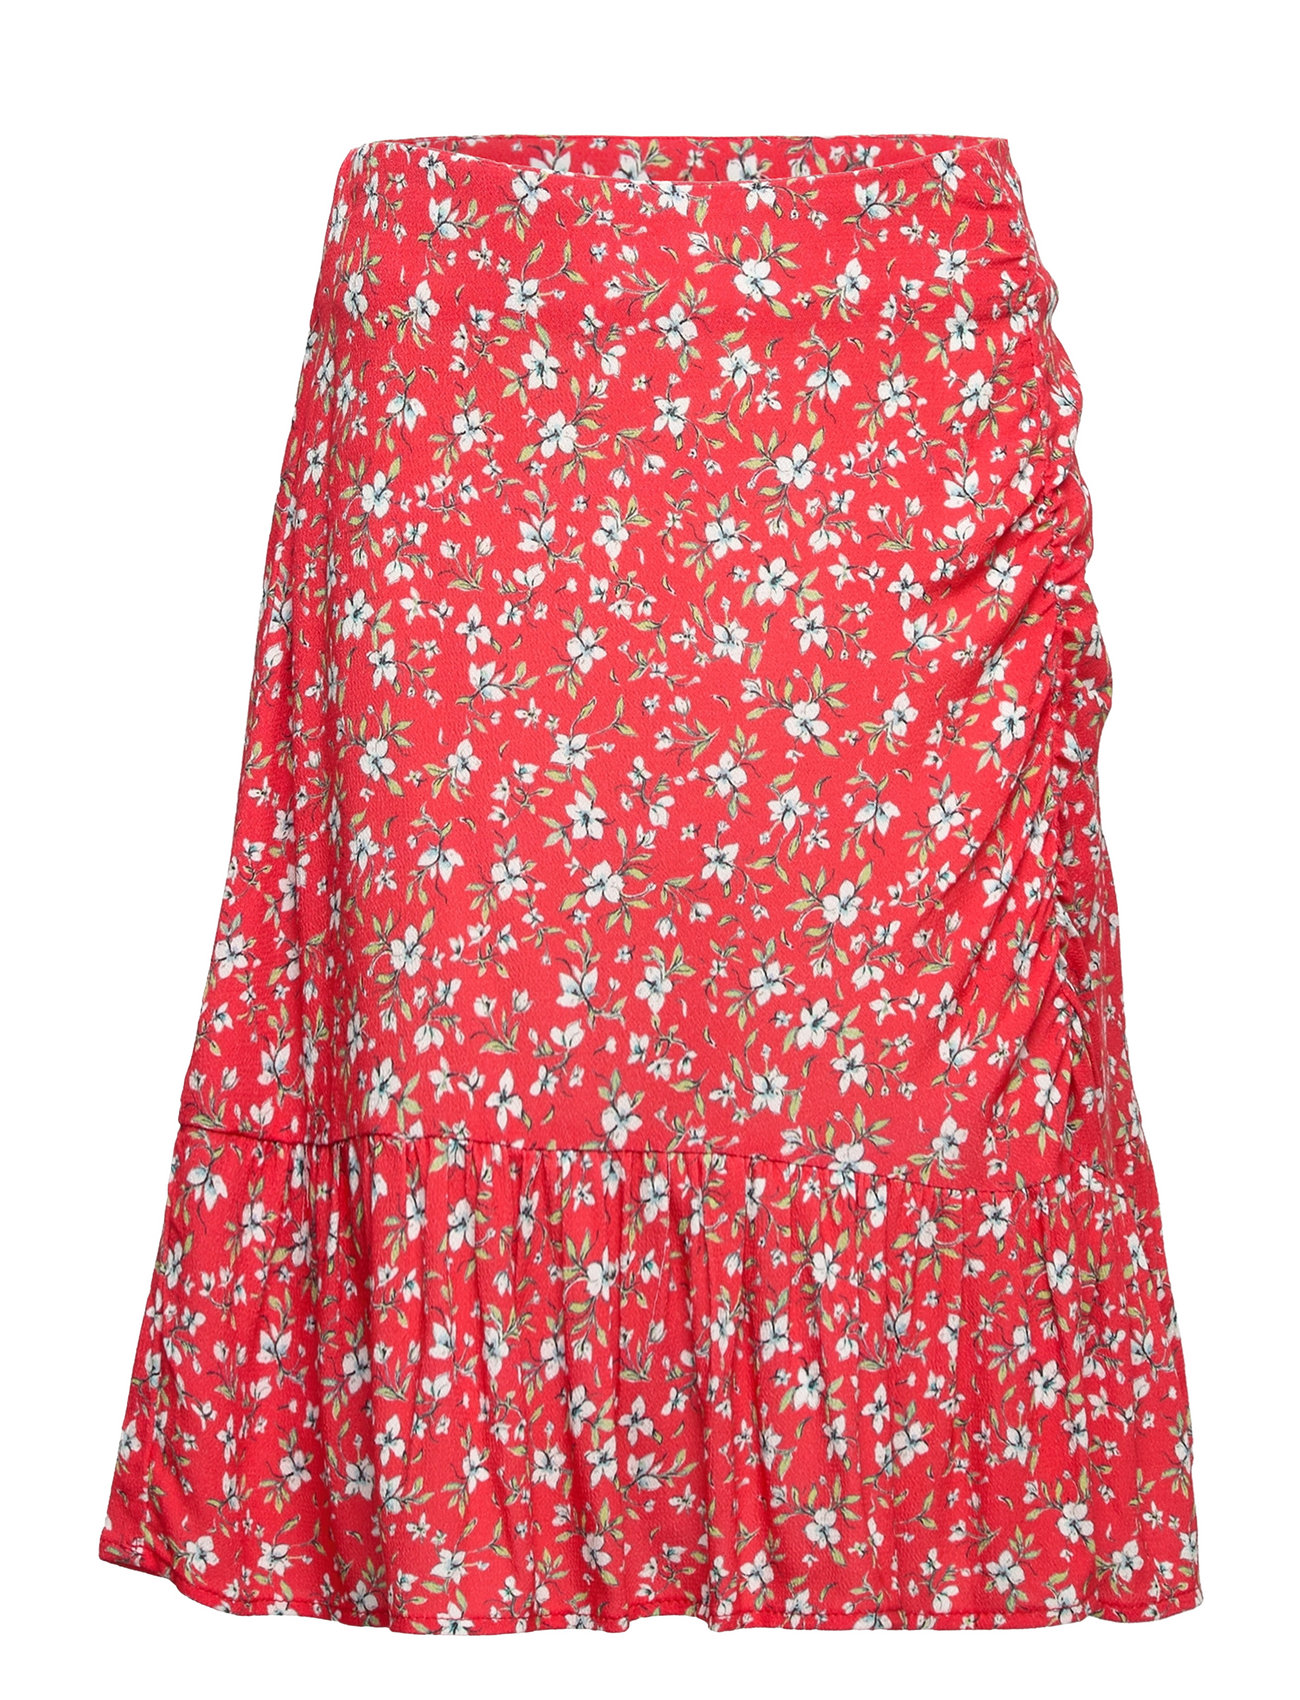 Pepium Dresses & Skirts Skirts Midi Skirts Multi/patterned Mango